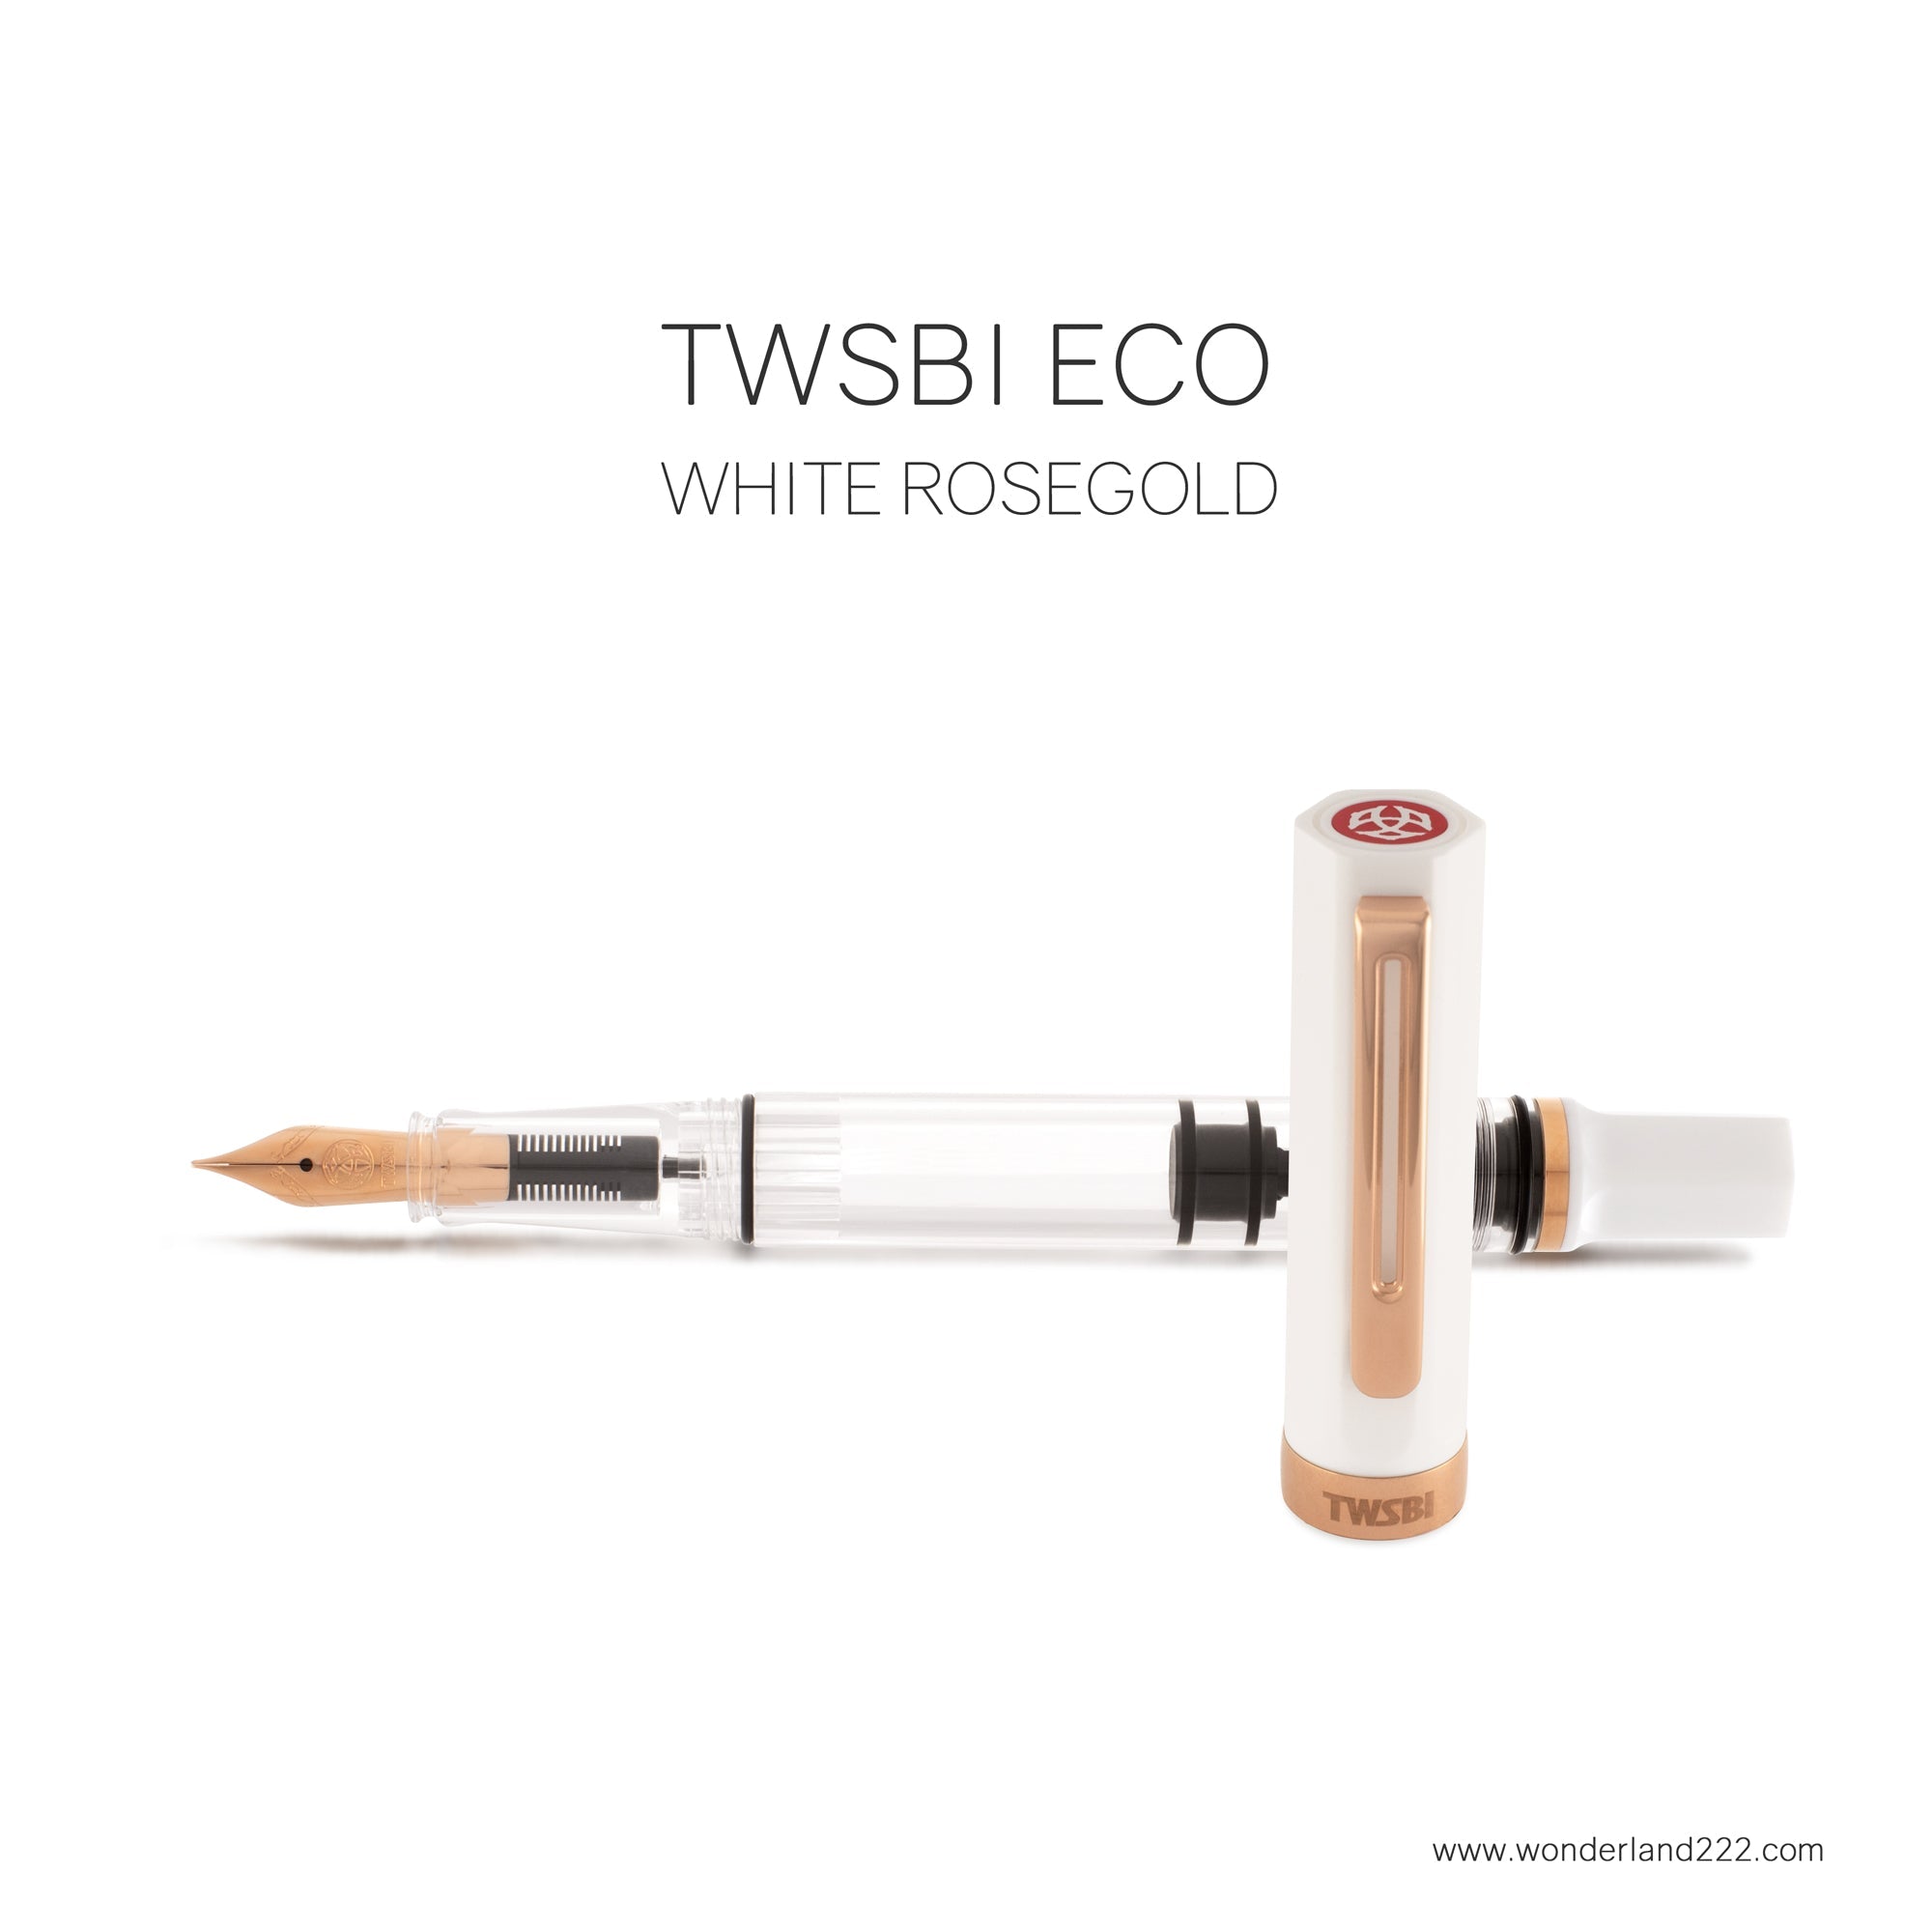 TWSBI-ECO-WHITE-ROSEGOLD-Image1_22759d19-369c-4646-a488-9b112ab8e938.jpg